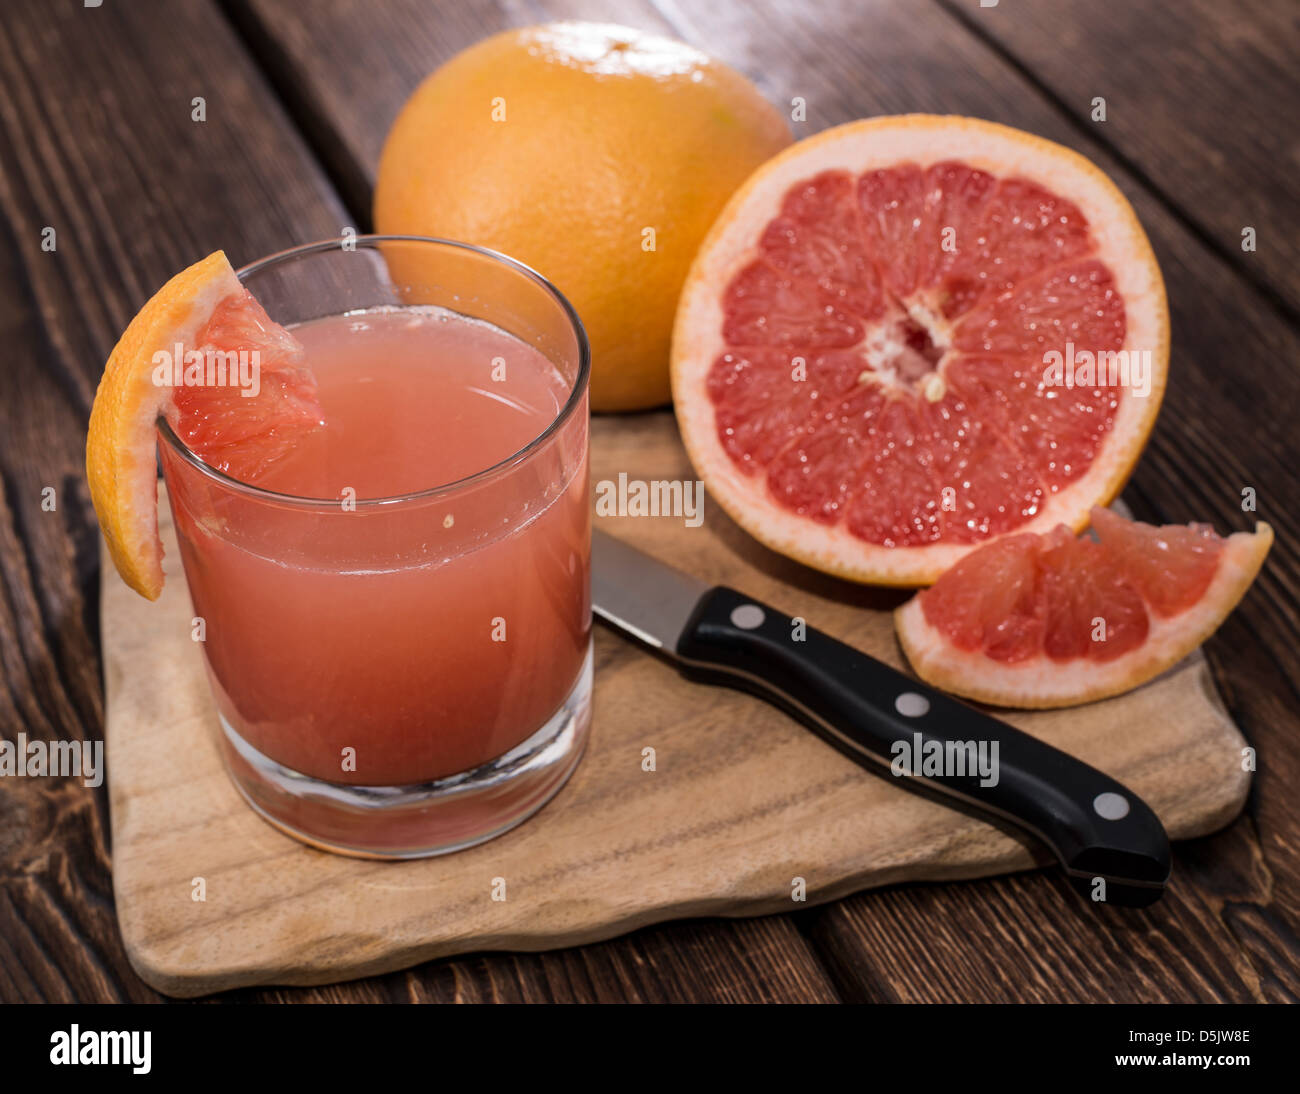 Portion of fresh made Grapefruit Juice Stock Photo